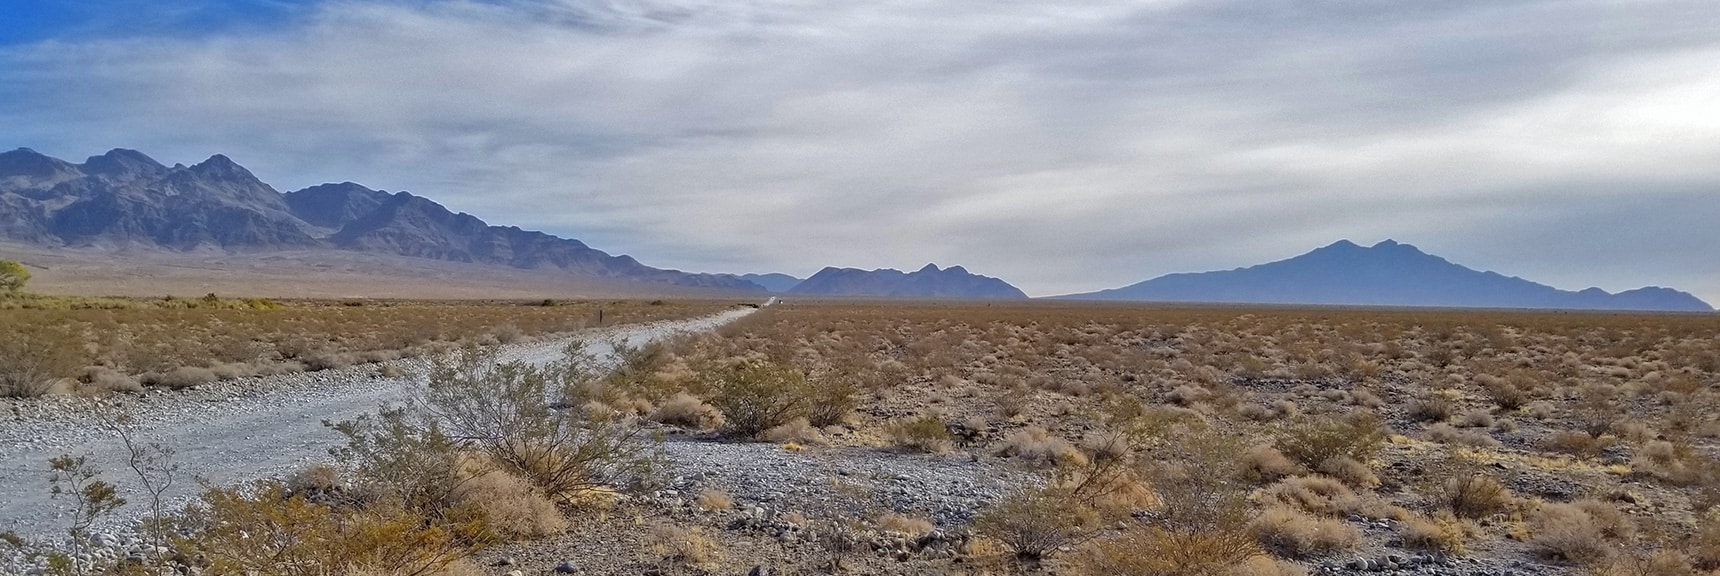 View Up Mormon Well Road Toward Fossil Ridge and Gass Peak | Smart Car Bike Rack and Mountain Bike Test, Sheep Range, Nevada